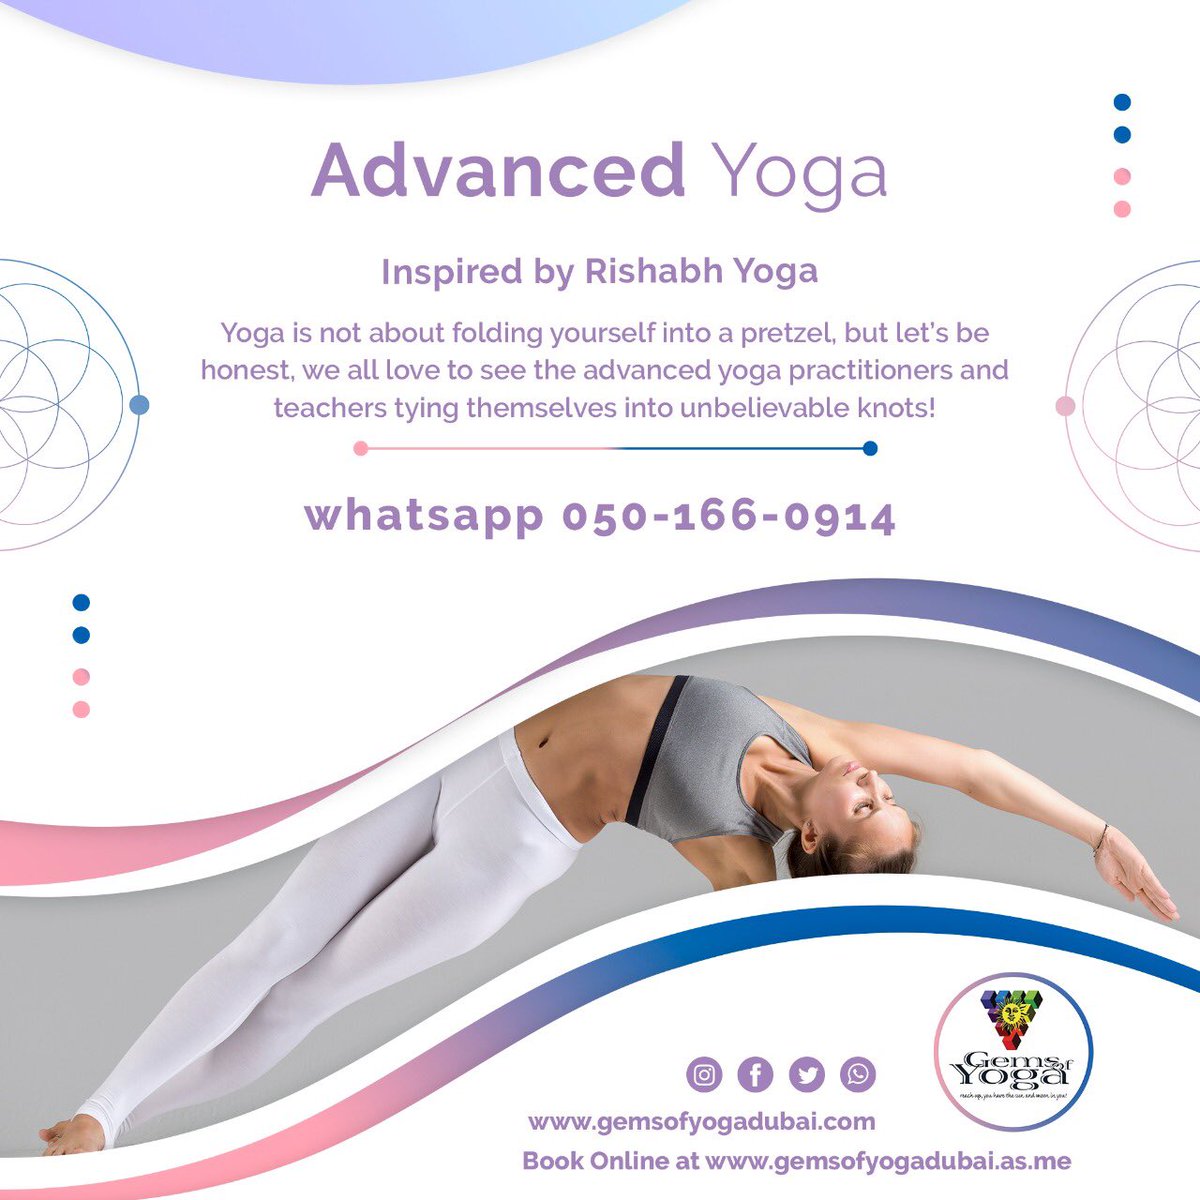 Yoga is not about folding yourself into a pretzel, but let’s be honest,

Read more: bit.ly/3nxUog9
Book Online at gemsofyogadubai.as.me

#idoyogadoyou #meditation #yoga #yogis #advancedyoga #yogaexpert #advanceyoga #yogaprofessionals #fitness #yogamat #uae #love #peace